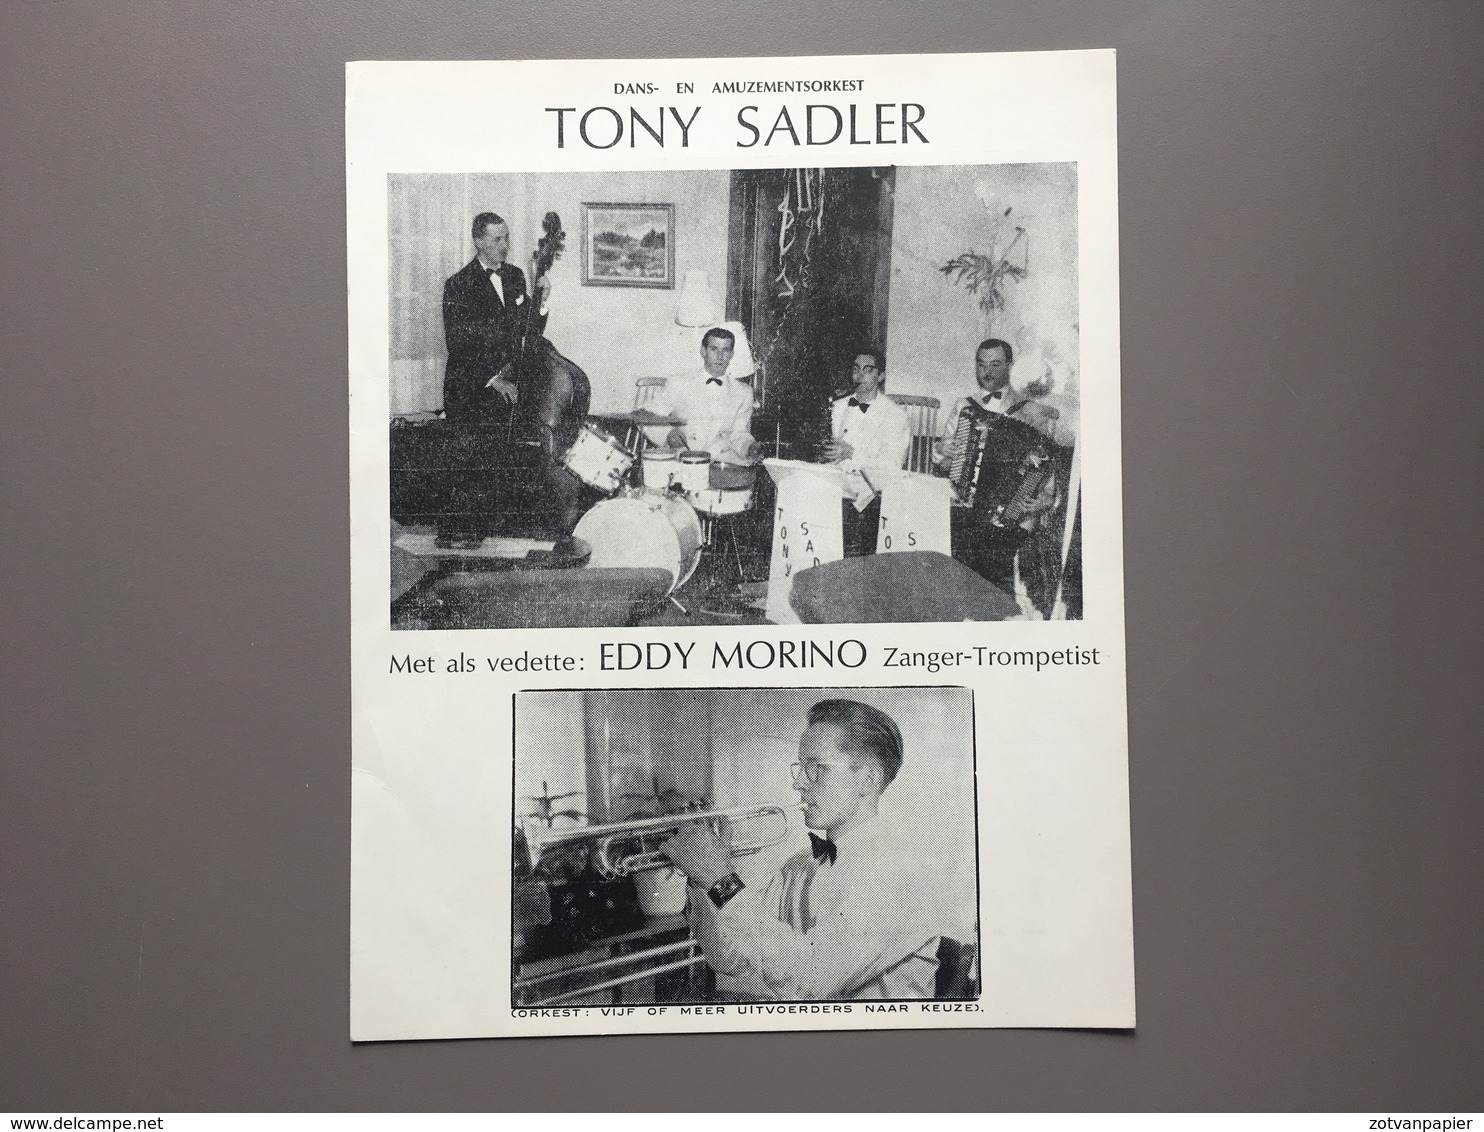 MELLE - Publiciteit - Tony Sadler - Dansorkest - Muziek - Music - Eddy Morino - Melle